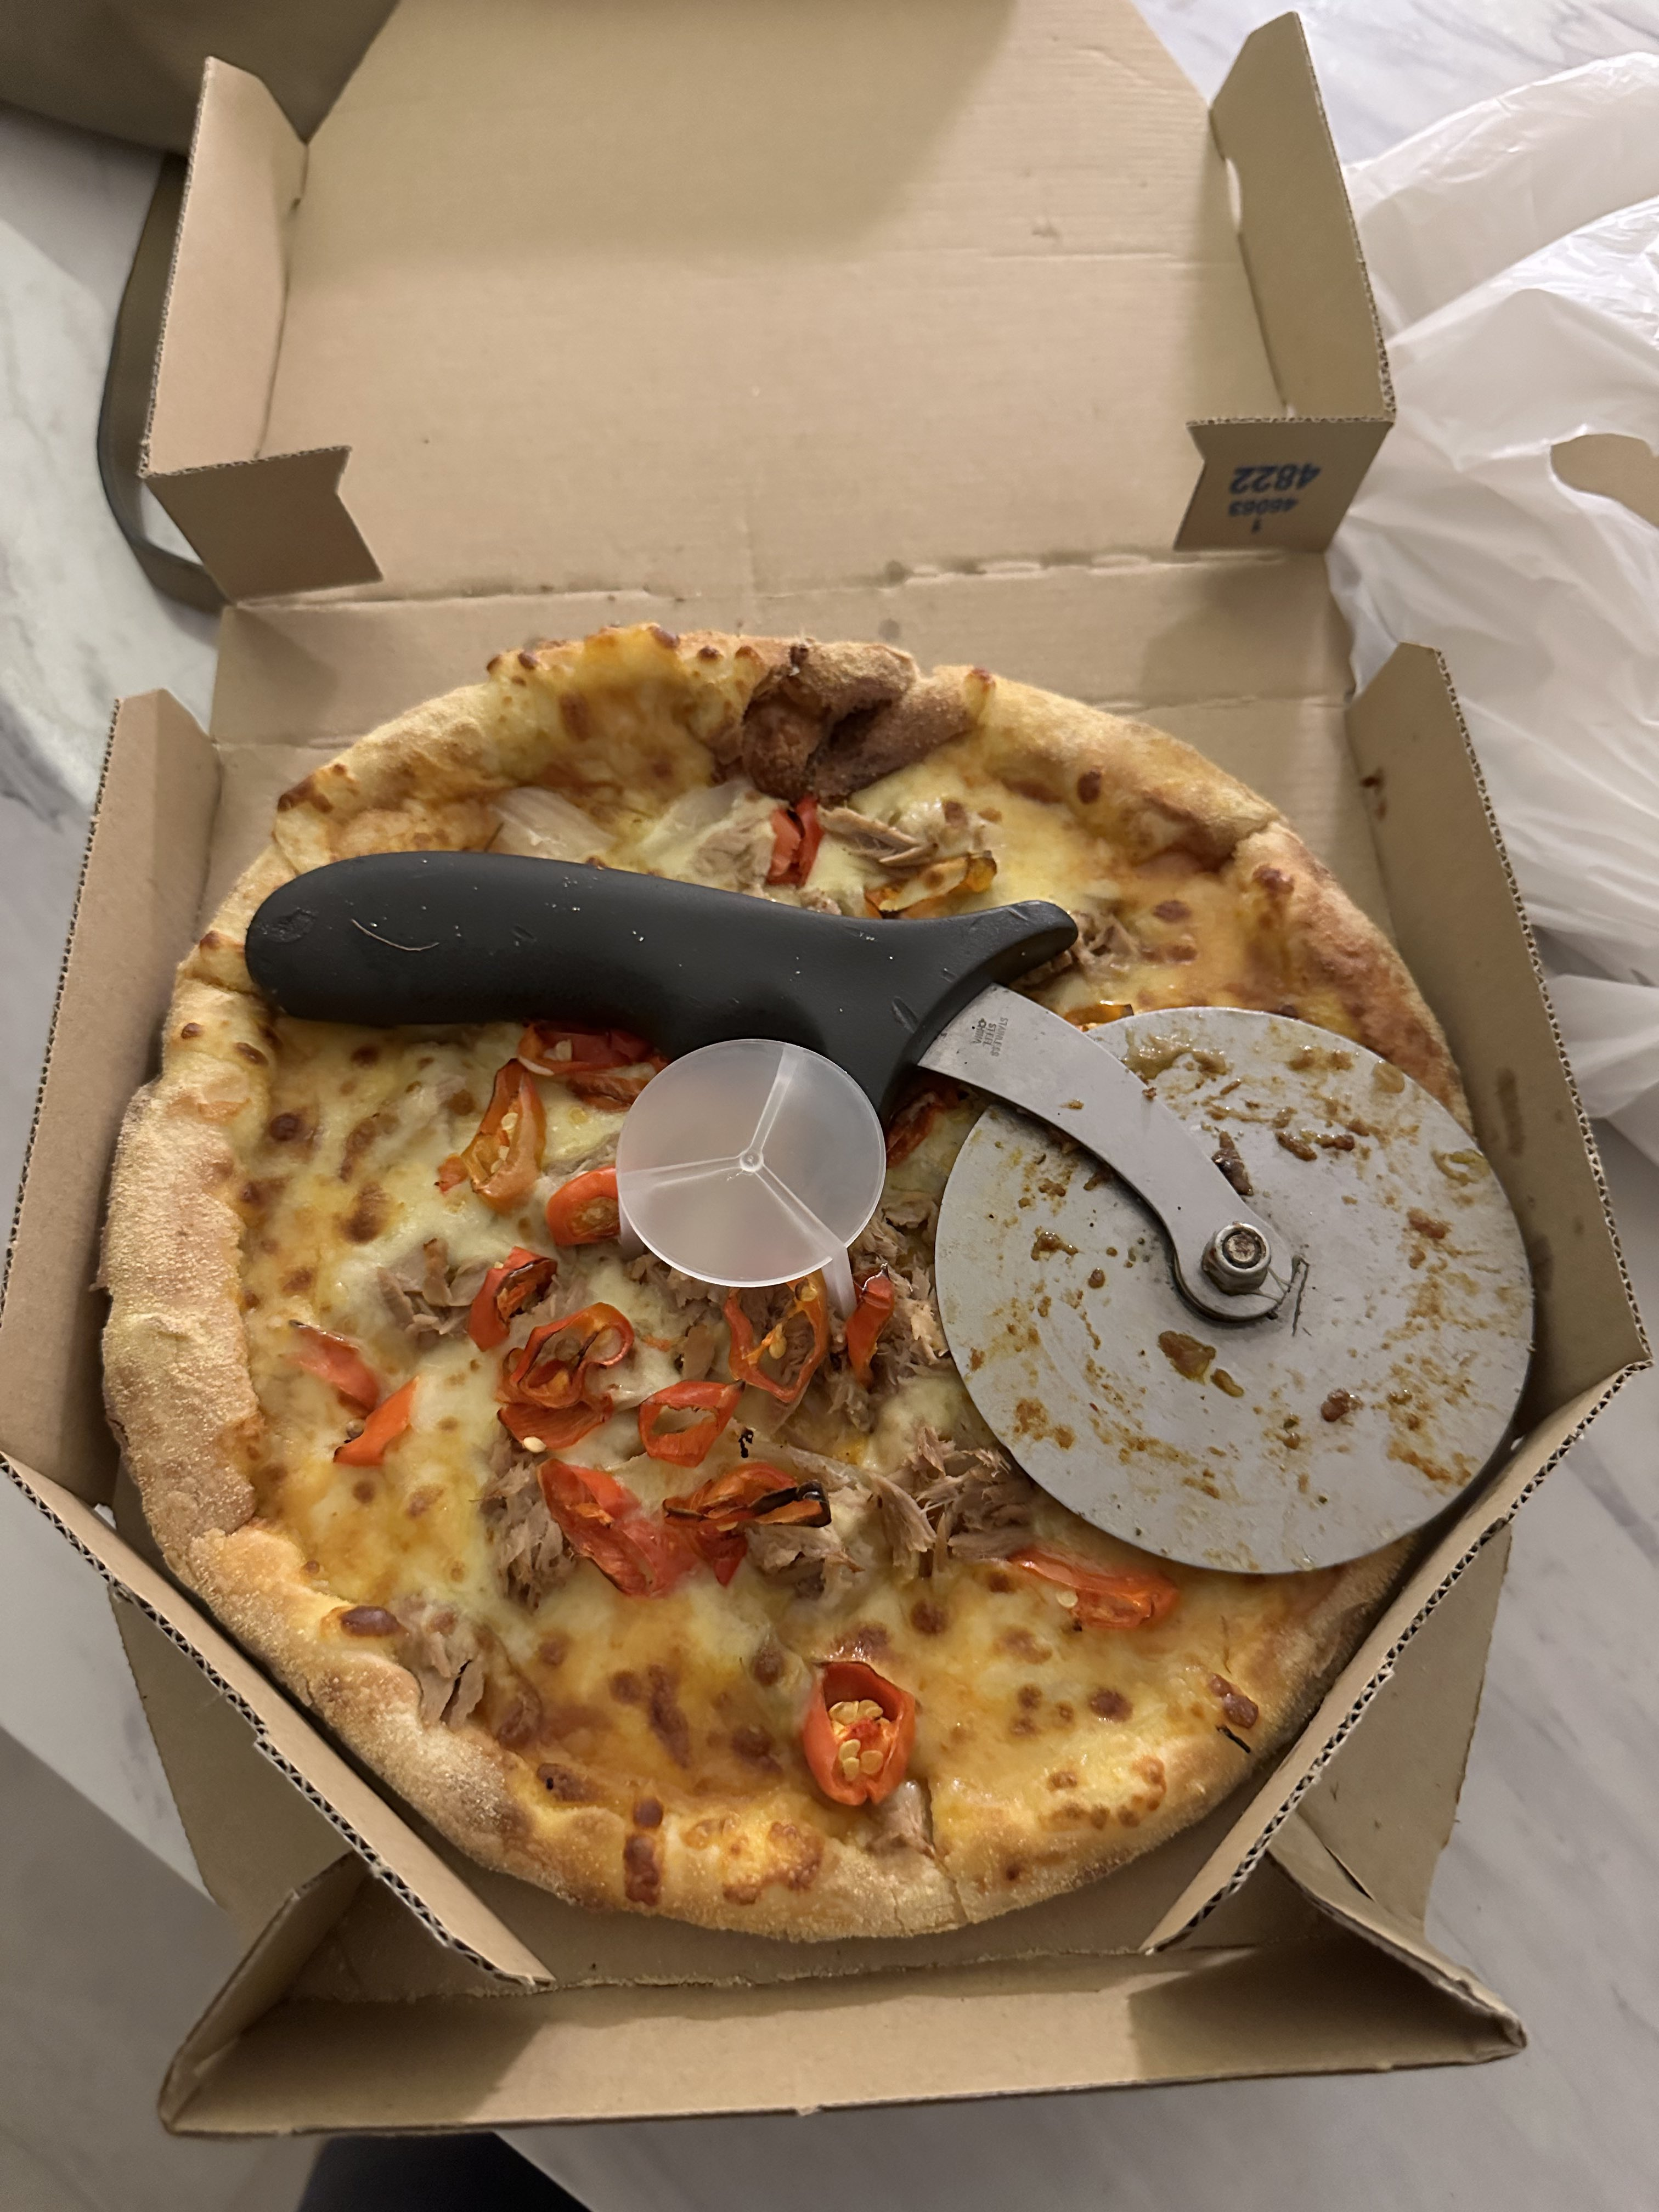 Pizza cutter inside pizza box